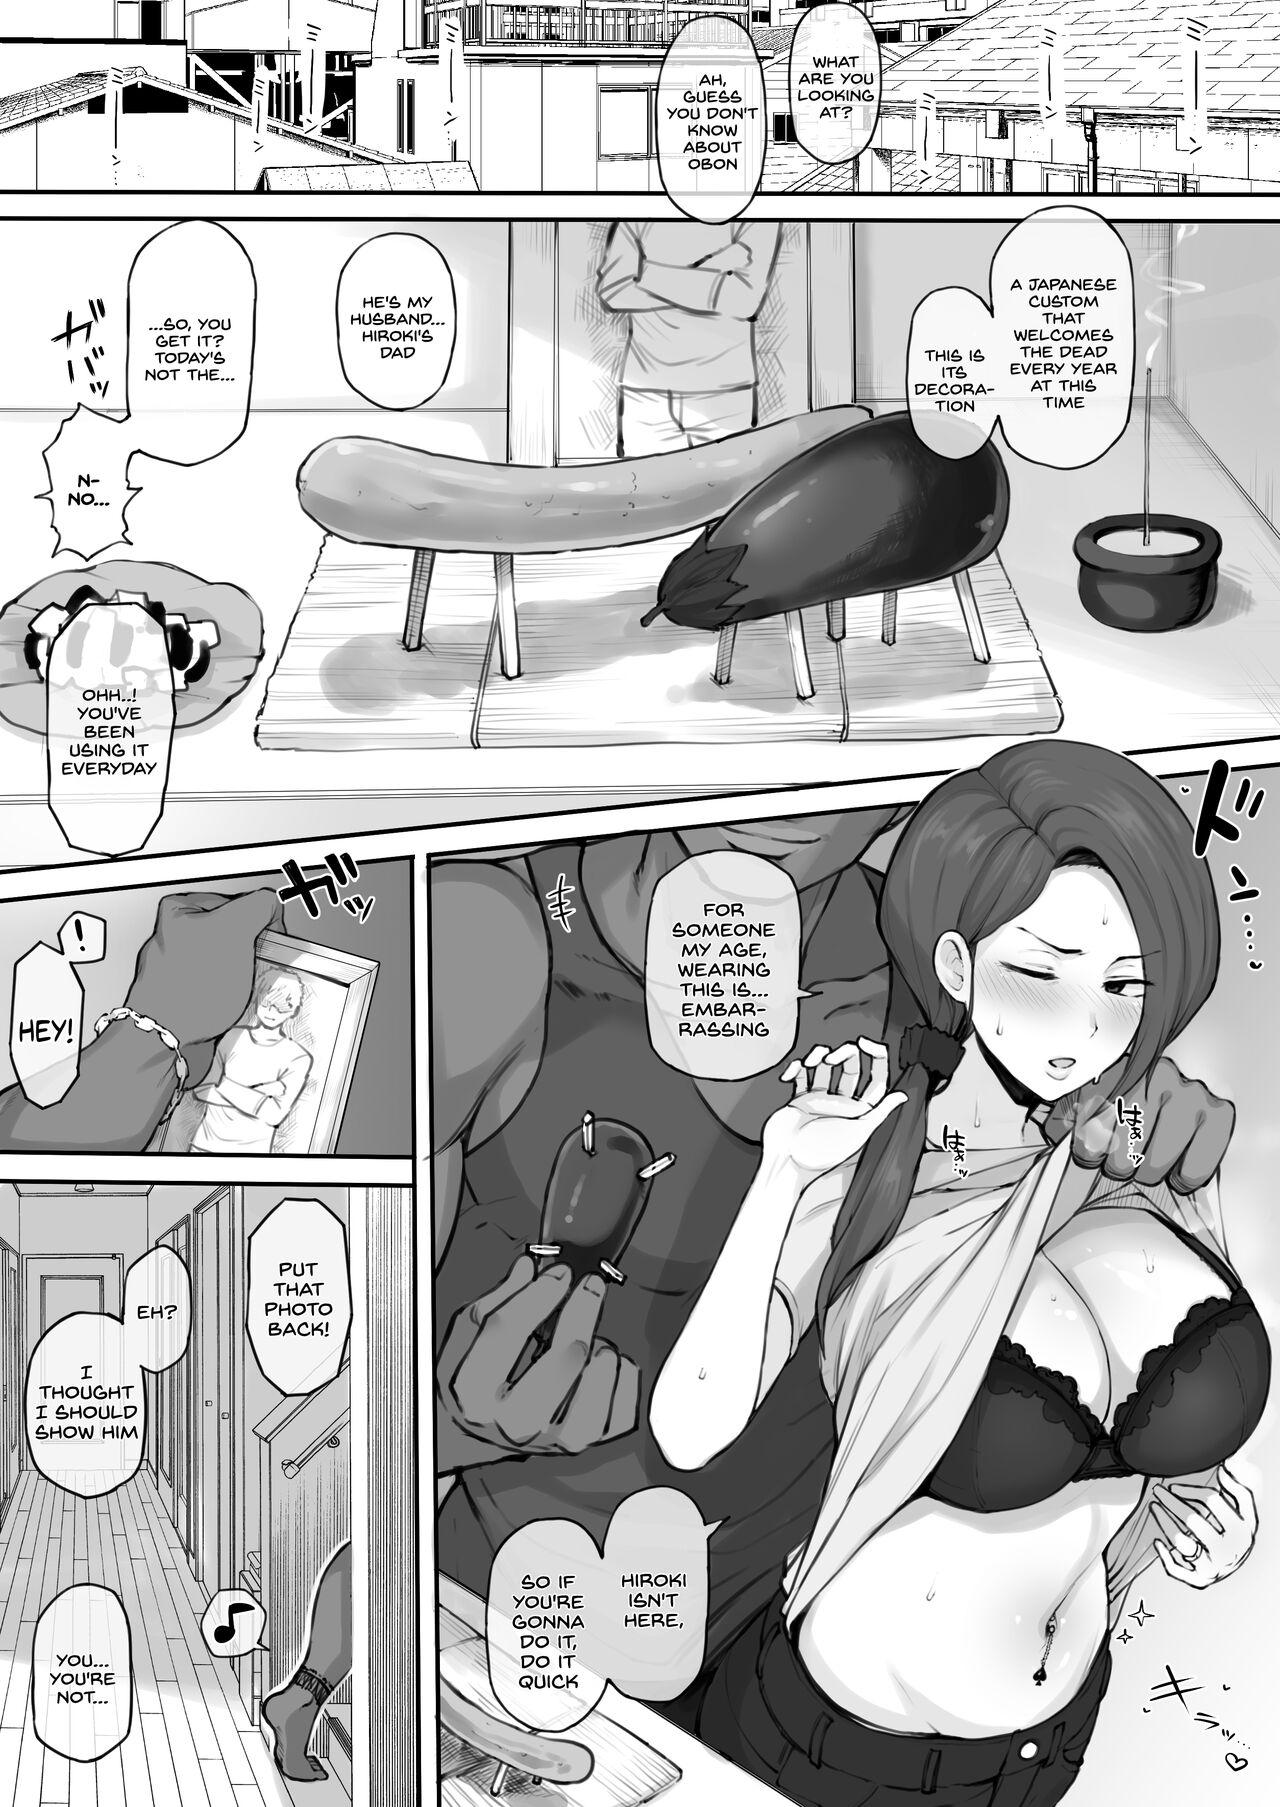 Kokujin no Tenkousei NTR ru Chapters 1-6 part 1 Plus Bonus chapter: Stolen Mother’s Breasts 18